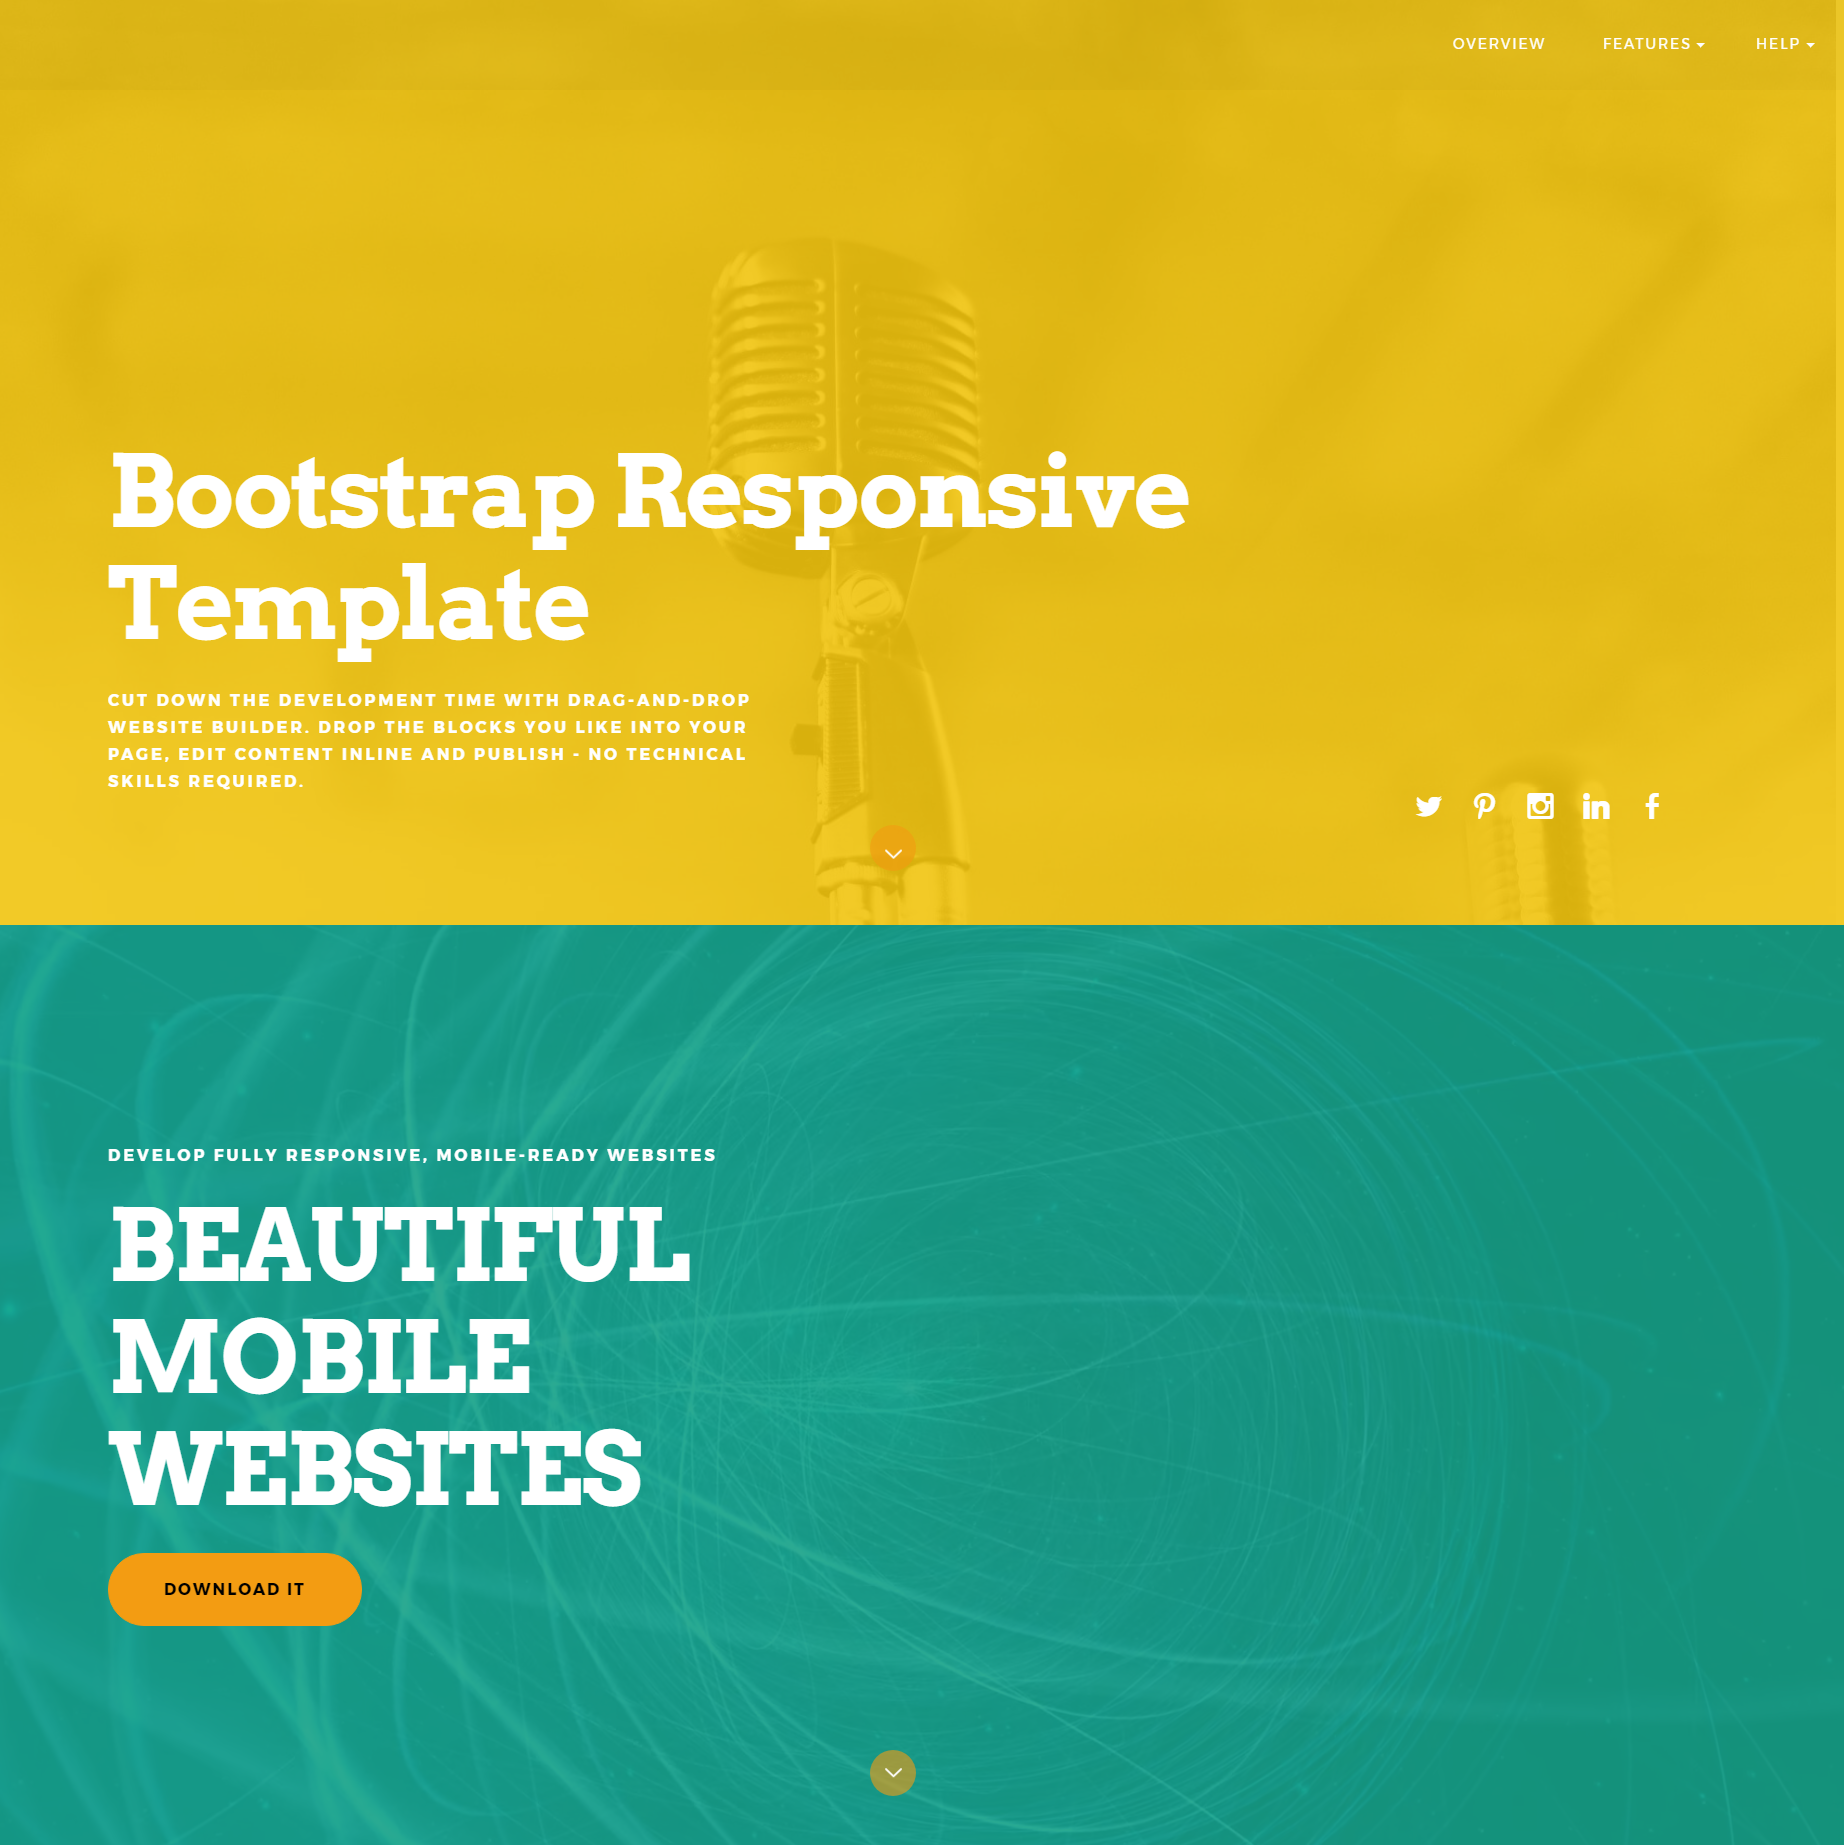 Responsive Bootstrap ColorM Templates